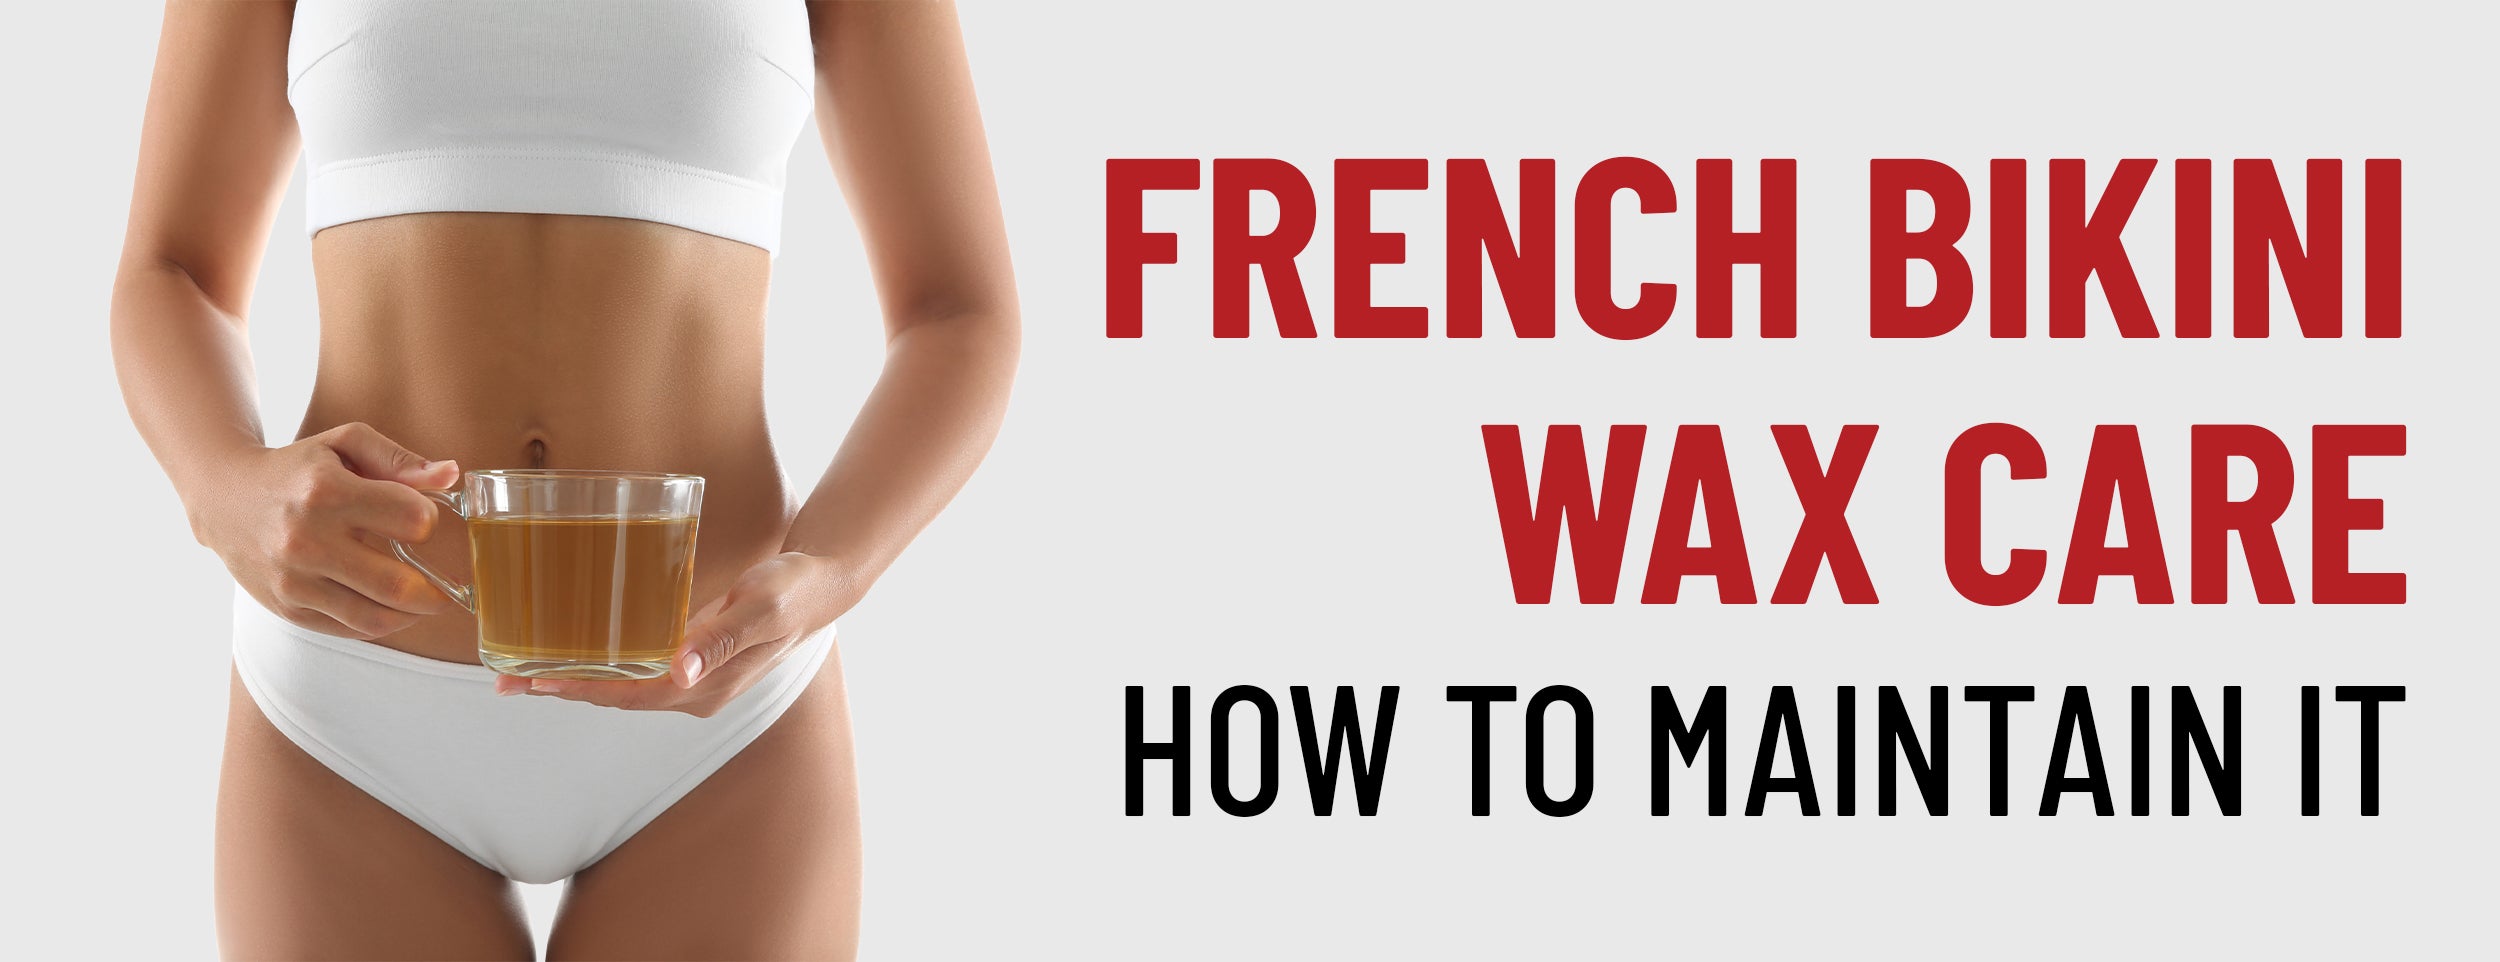 The Care and Maintenance of French Bikini Wax